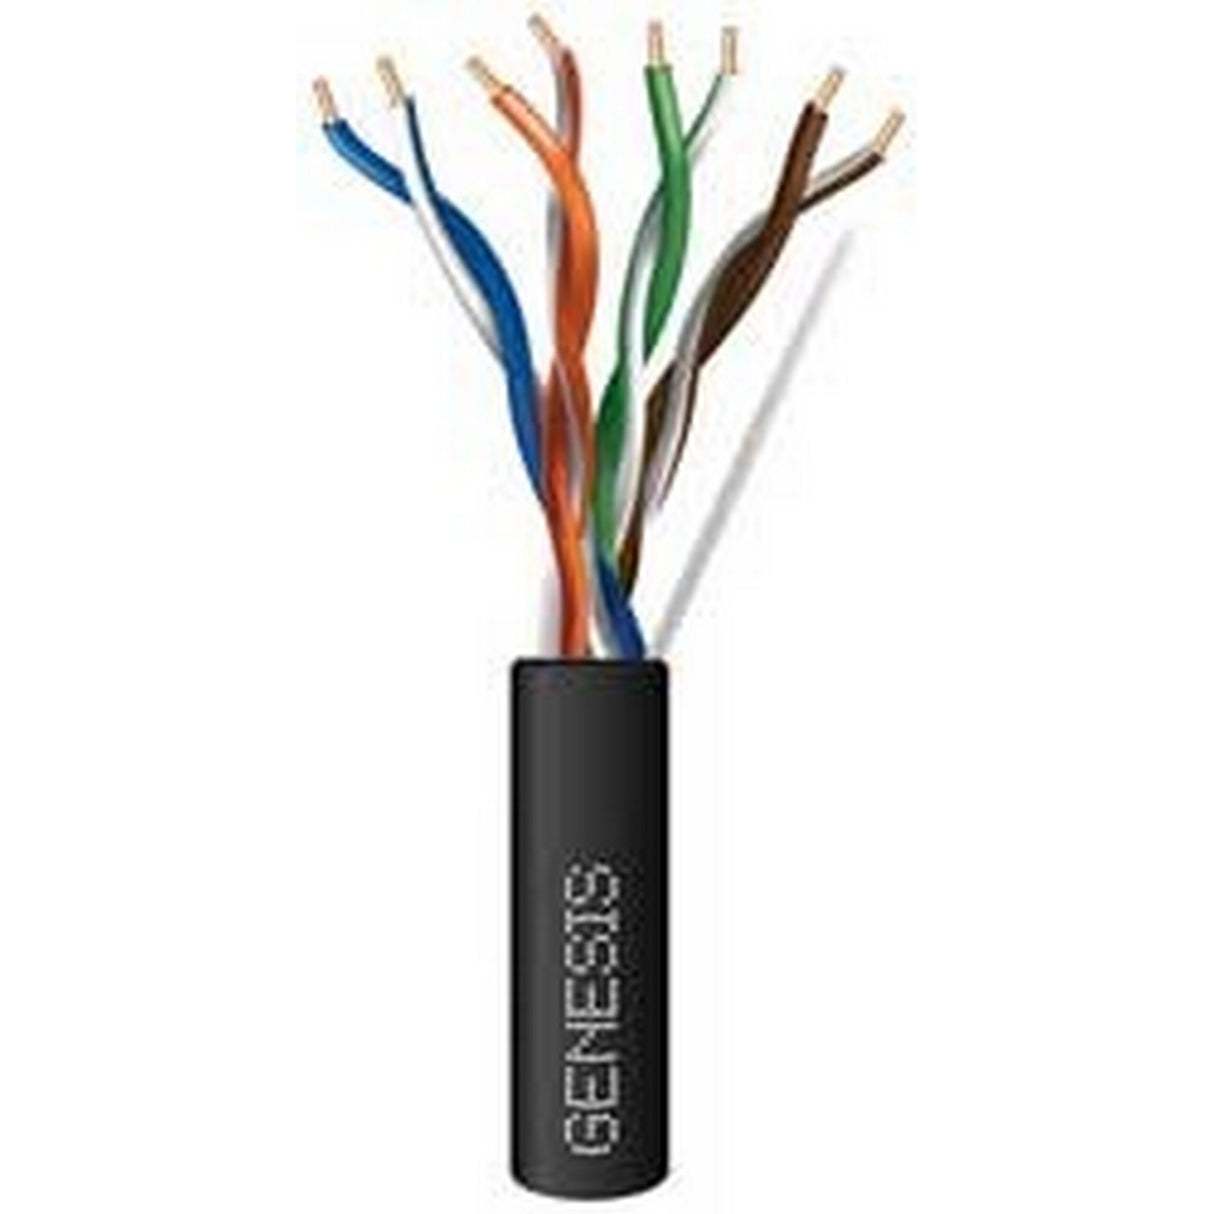 Genesis Cat 5e 24G Riser Cable 1000 Foot Box, Black